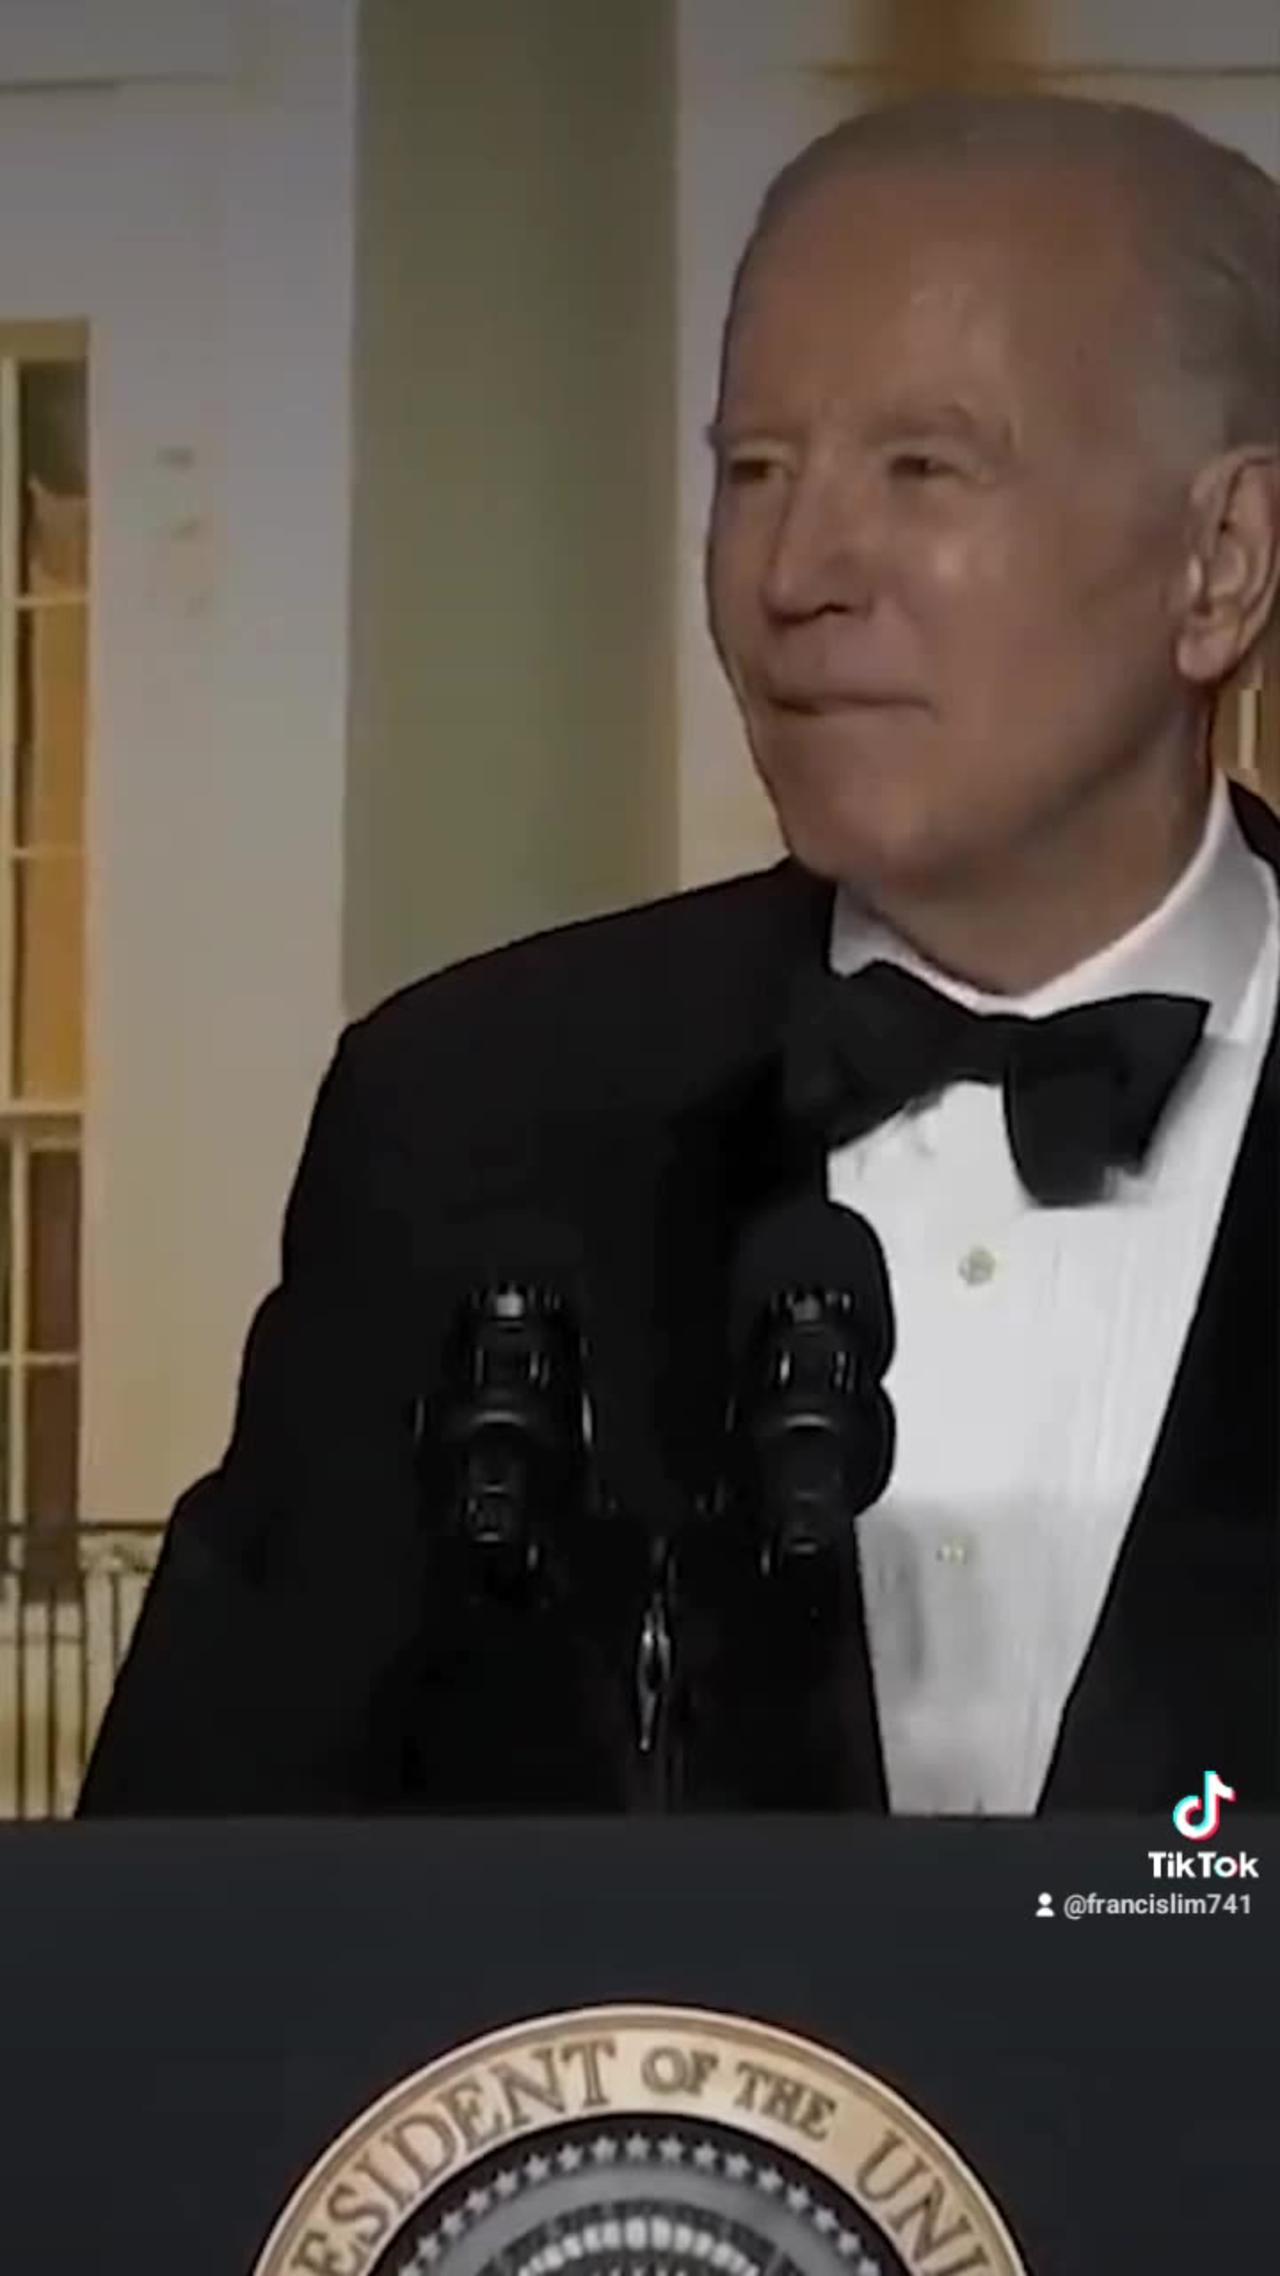 Biden jokes about his age at White House Correspondents' Dinner